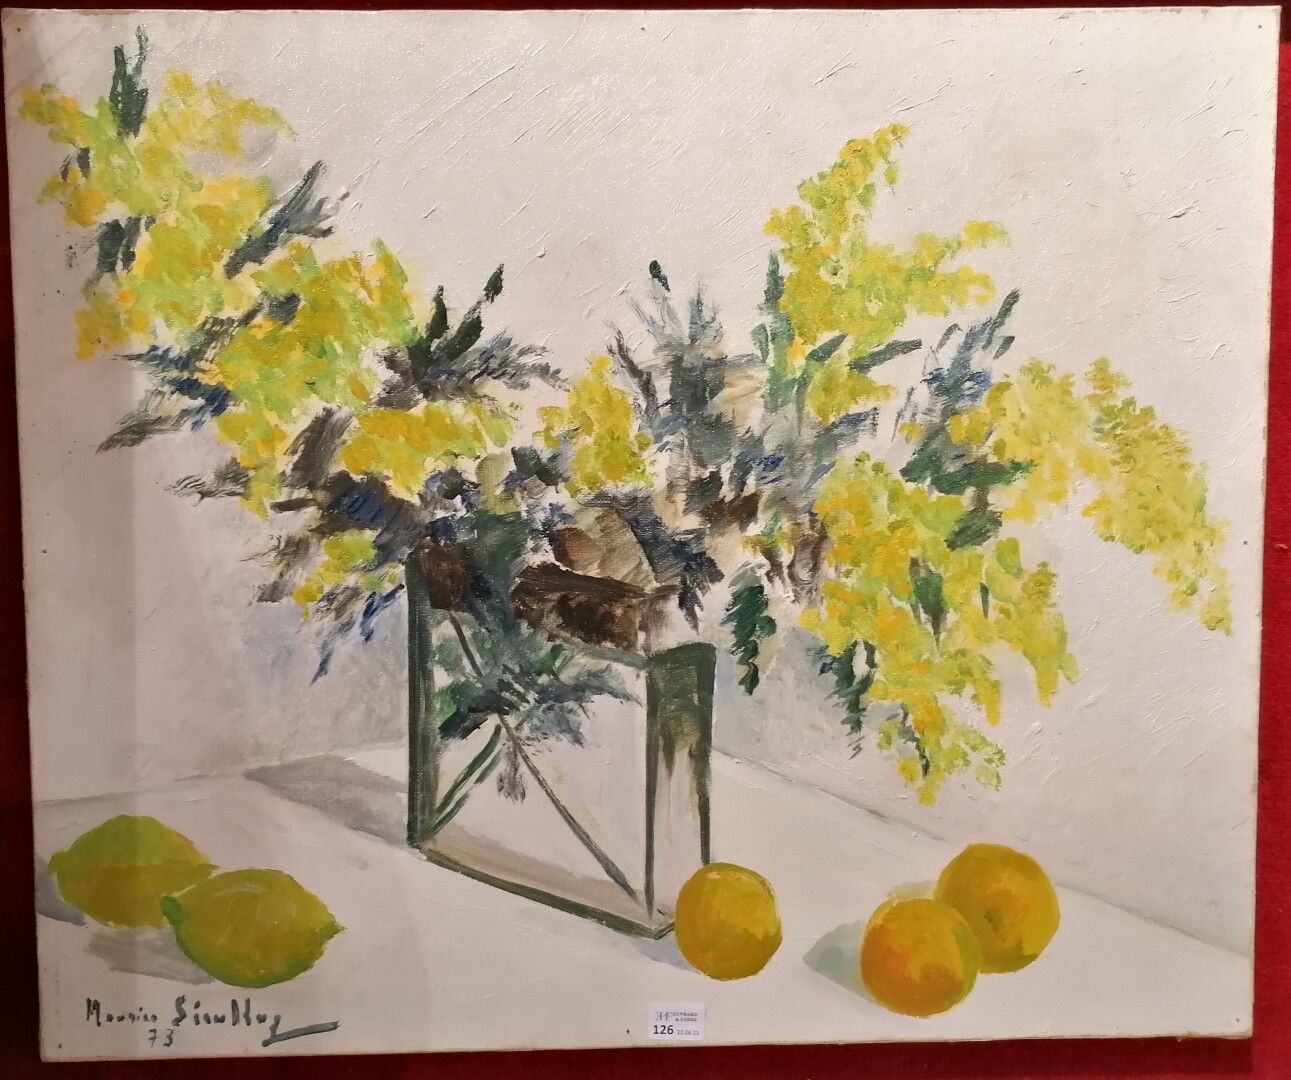 Null 莫里斯-塞拉兹(1914-1997)

柠檬和含羞草的静物画

布面油画，左下方有签名和日期73

66 x 45厘米